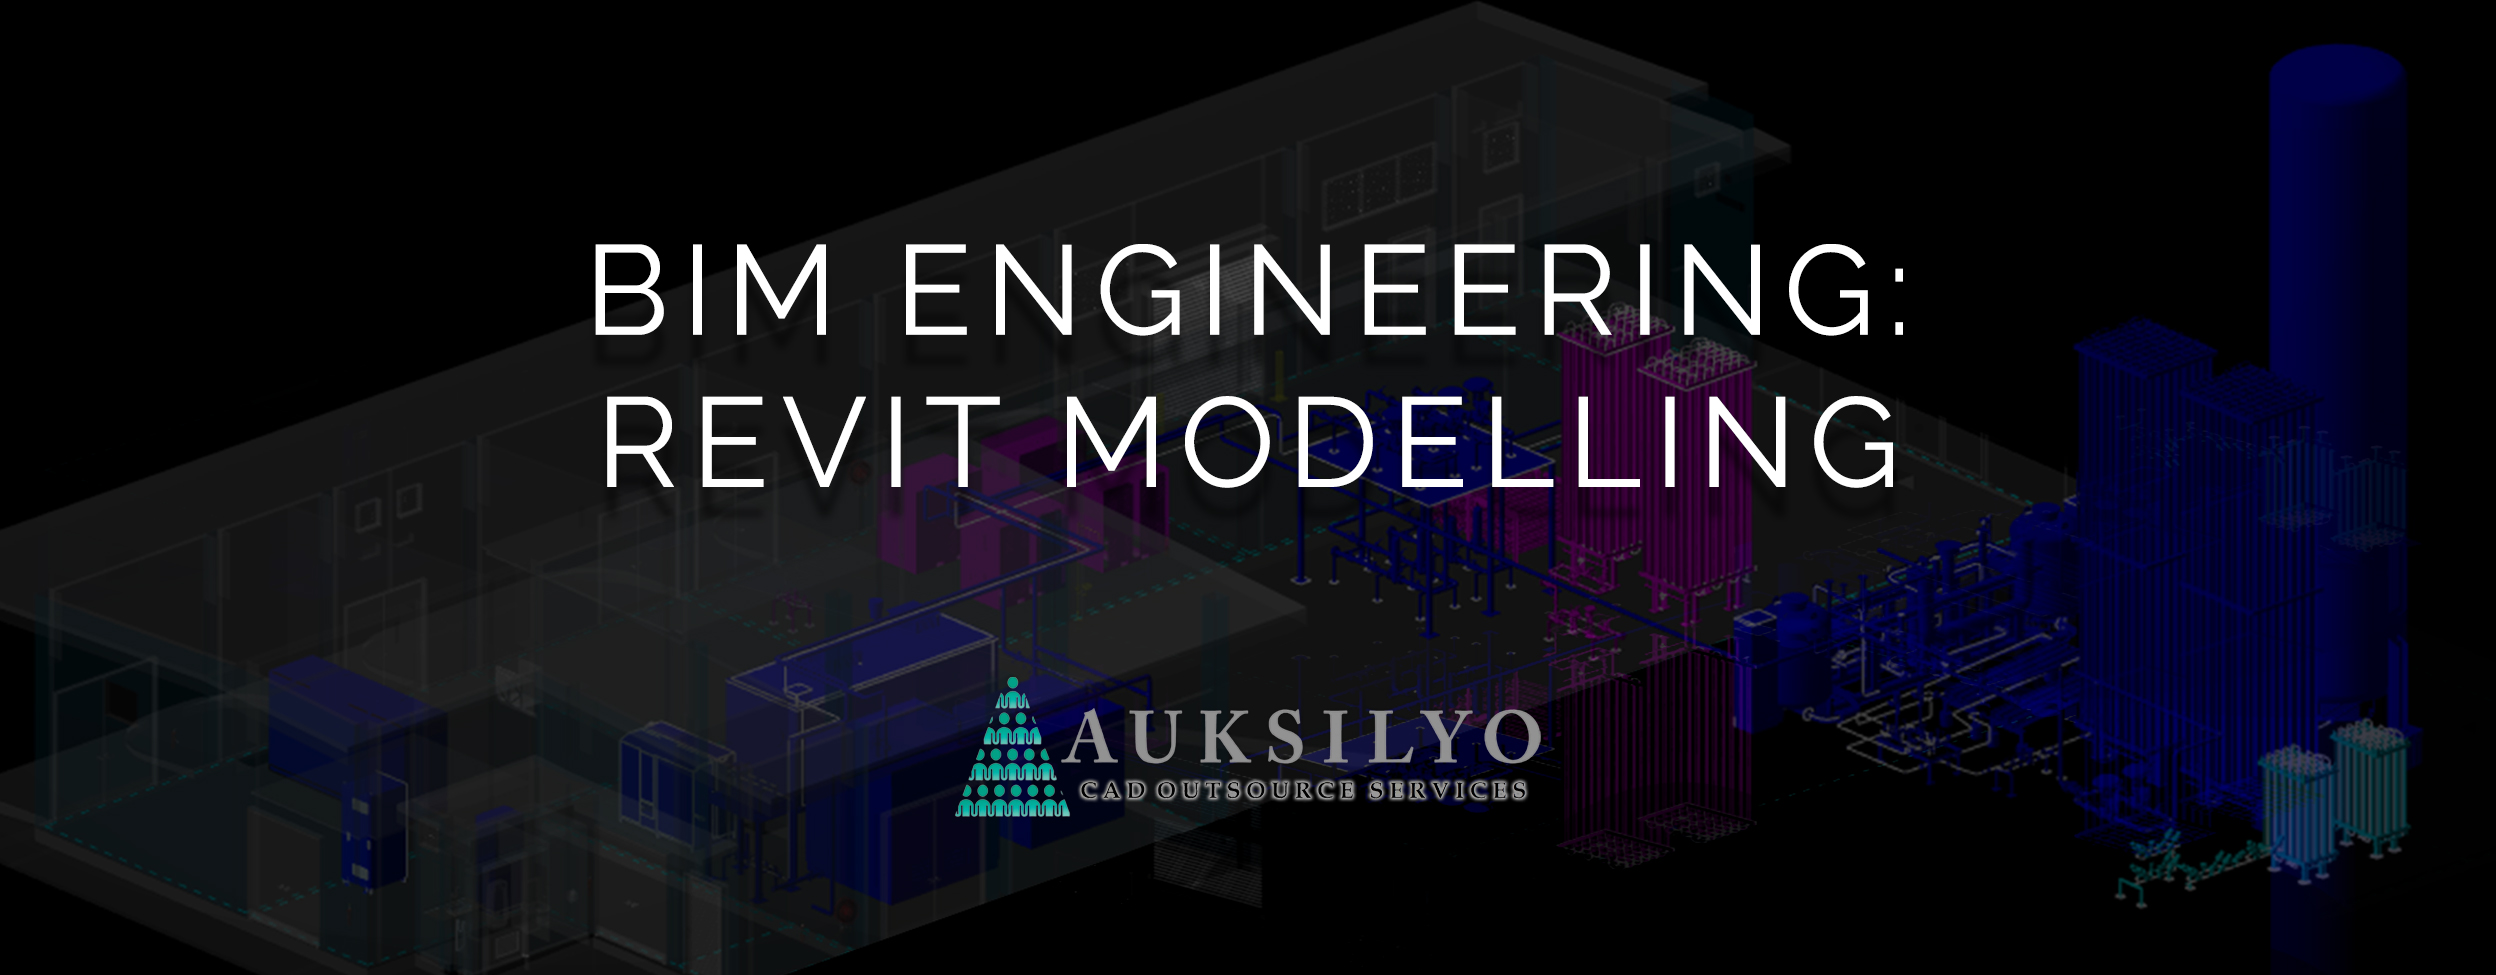 BIM Engineering: REVIT MODELLING - Auksilyo Professionals